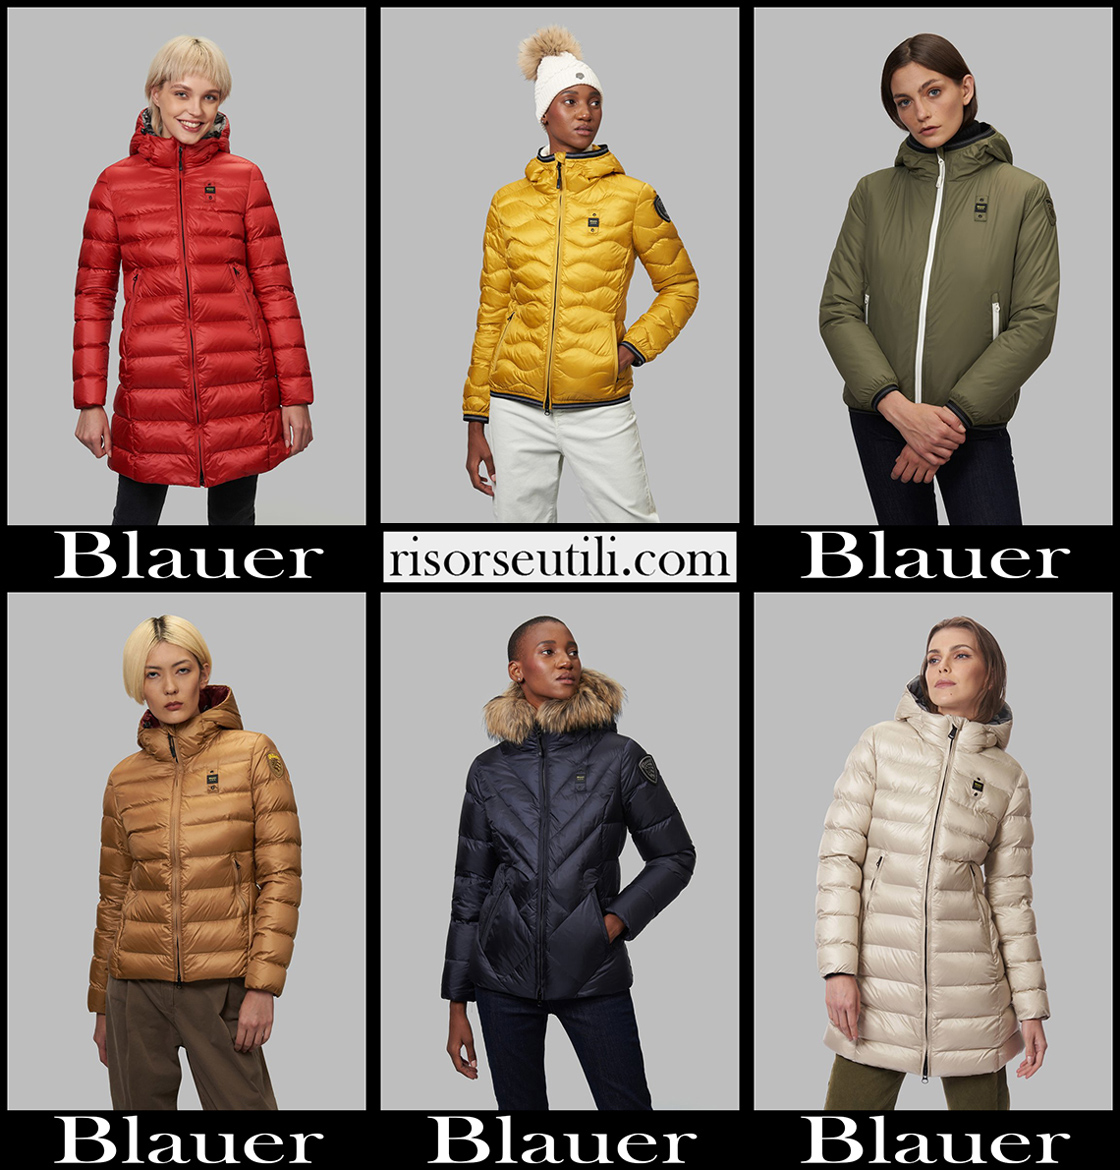 Blauer jackets 20-2021 fall winter men's collection